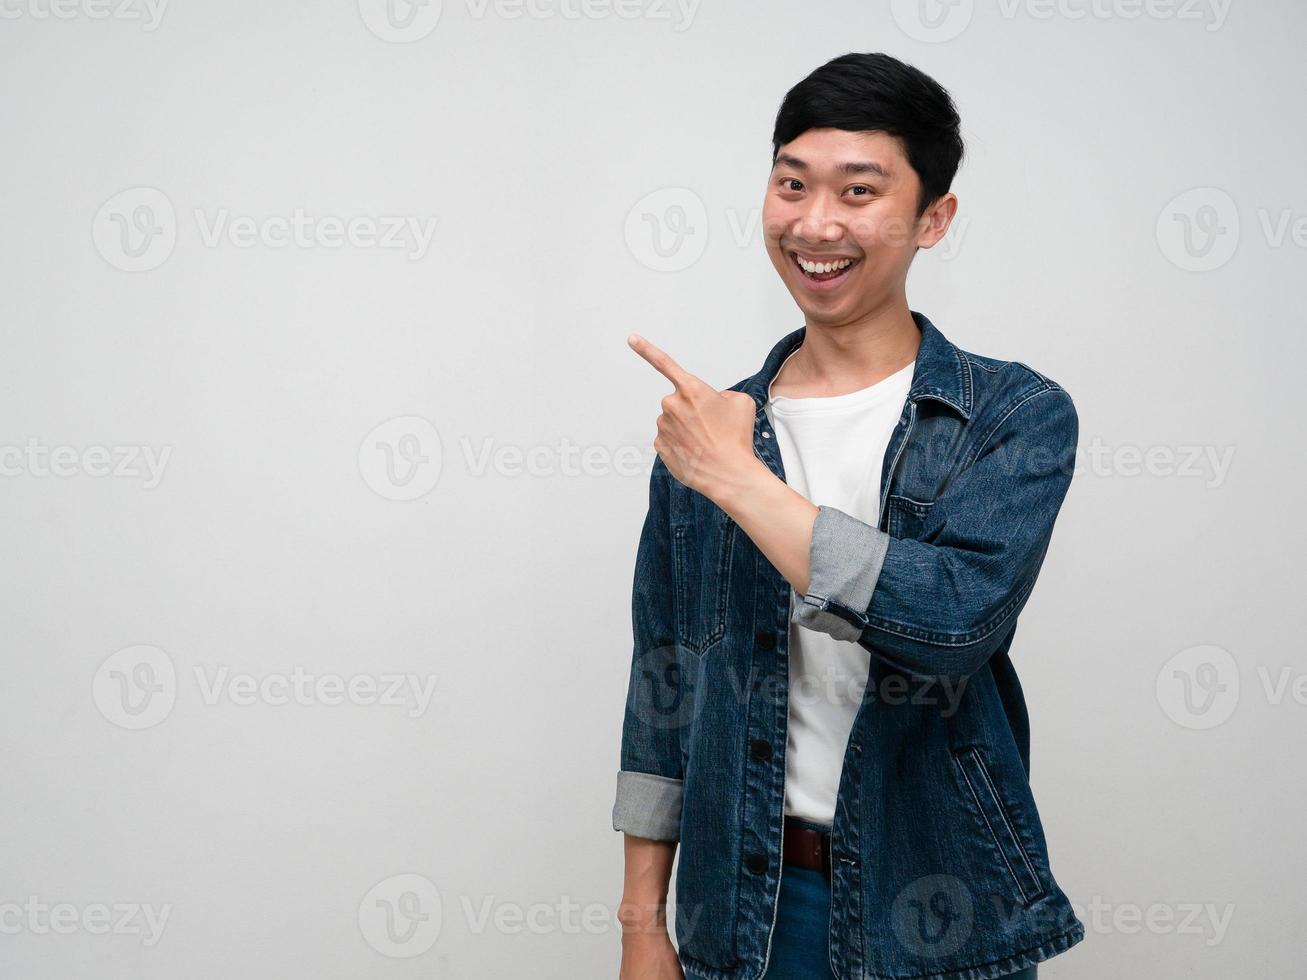 homem positivo jeans camisa feliz sorriso gesto ponto dedo cópia espaço isolado foto